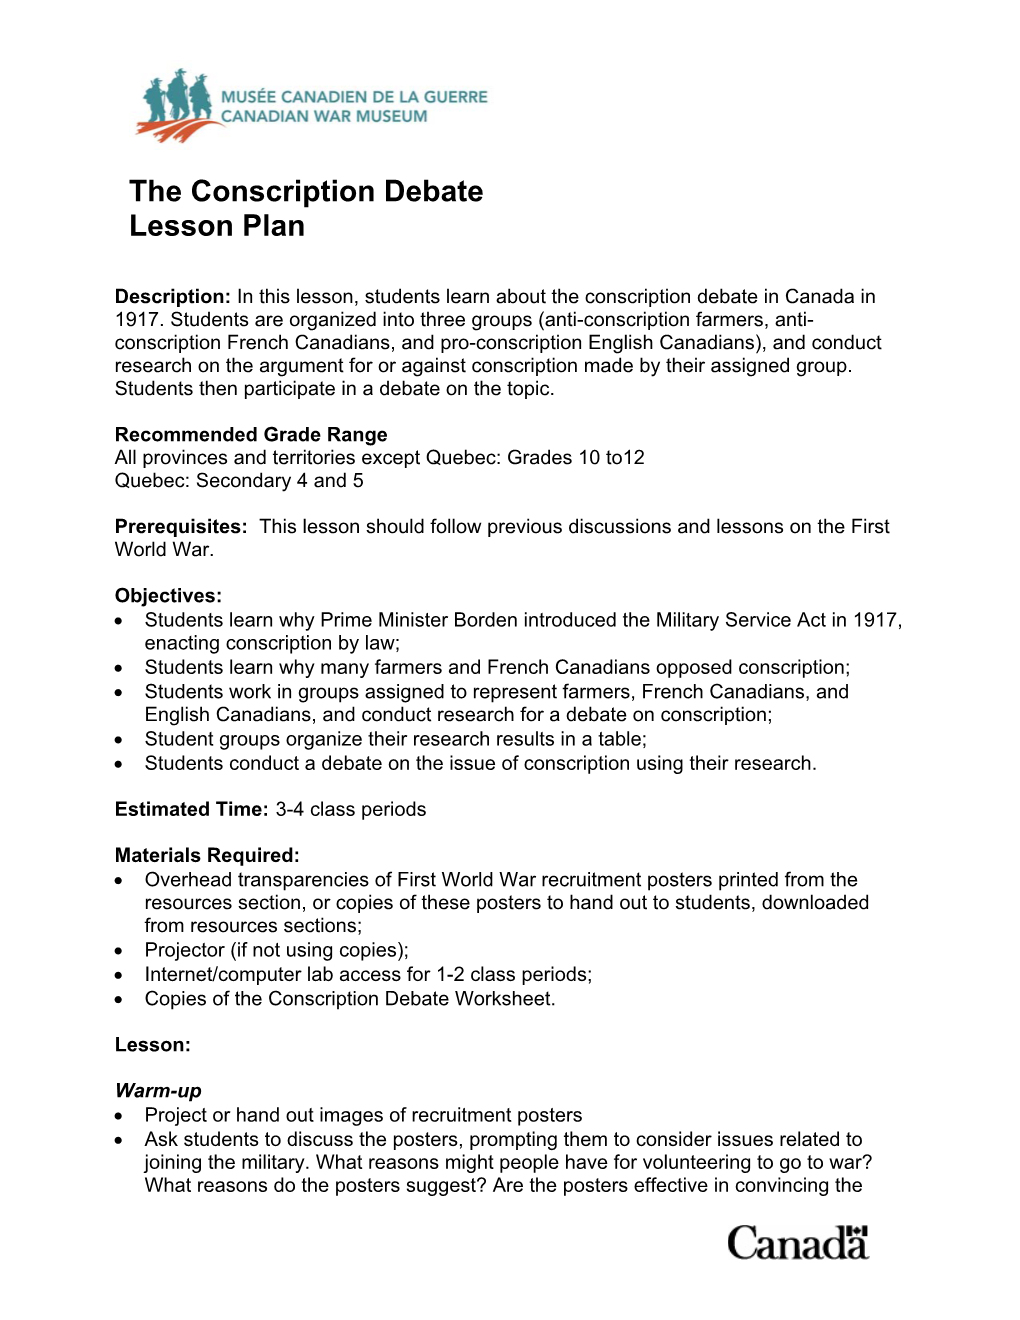 The Conscription Debate Lesson Plan